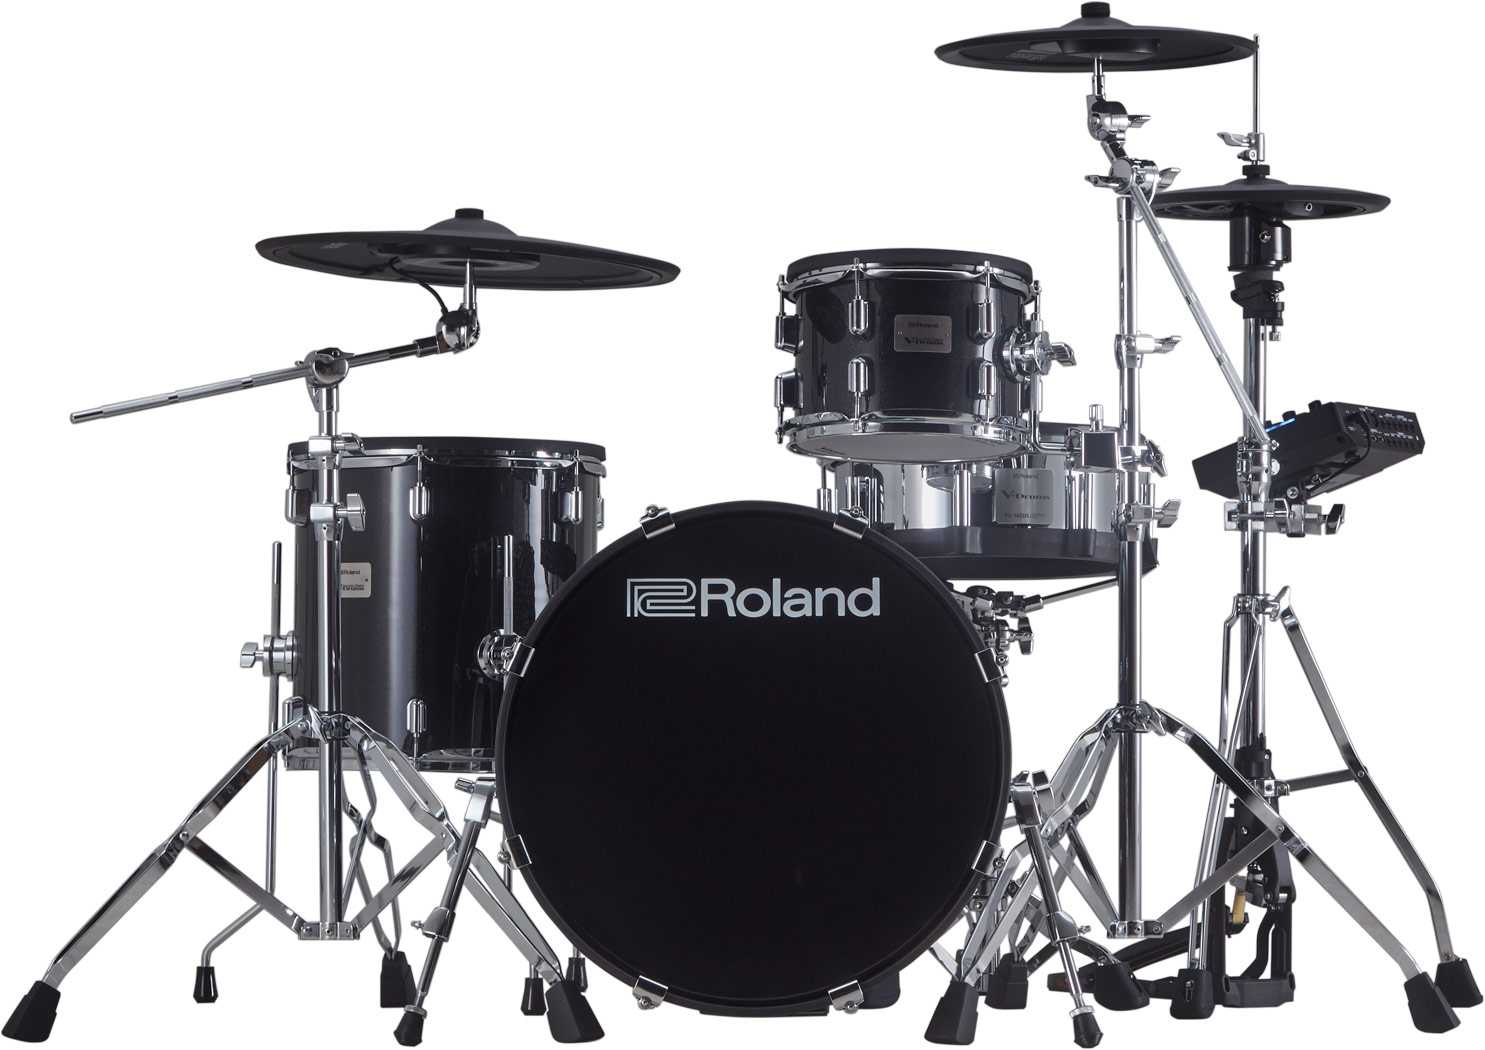 Roland VAD503 drumkit